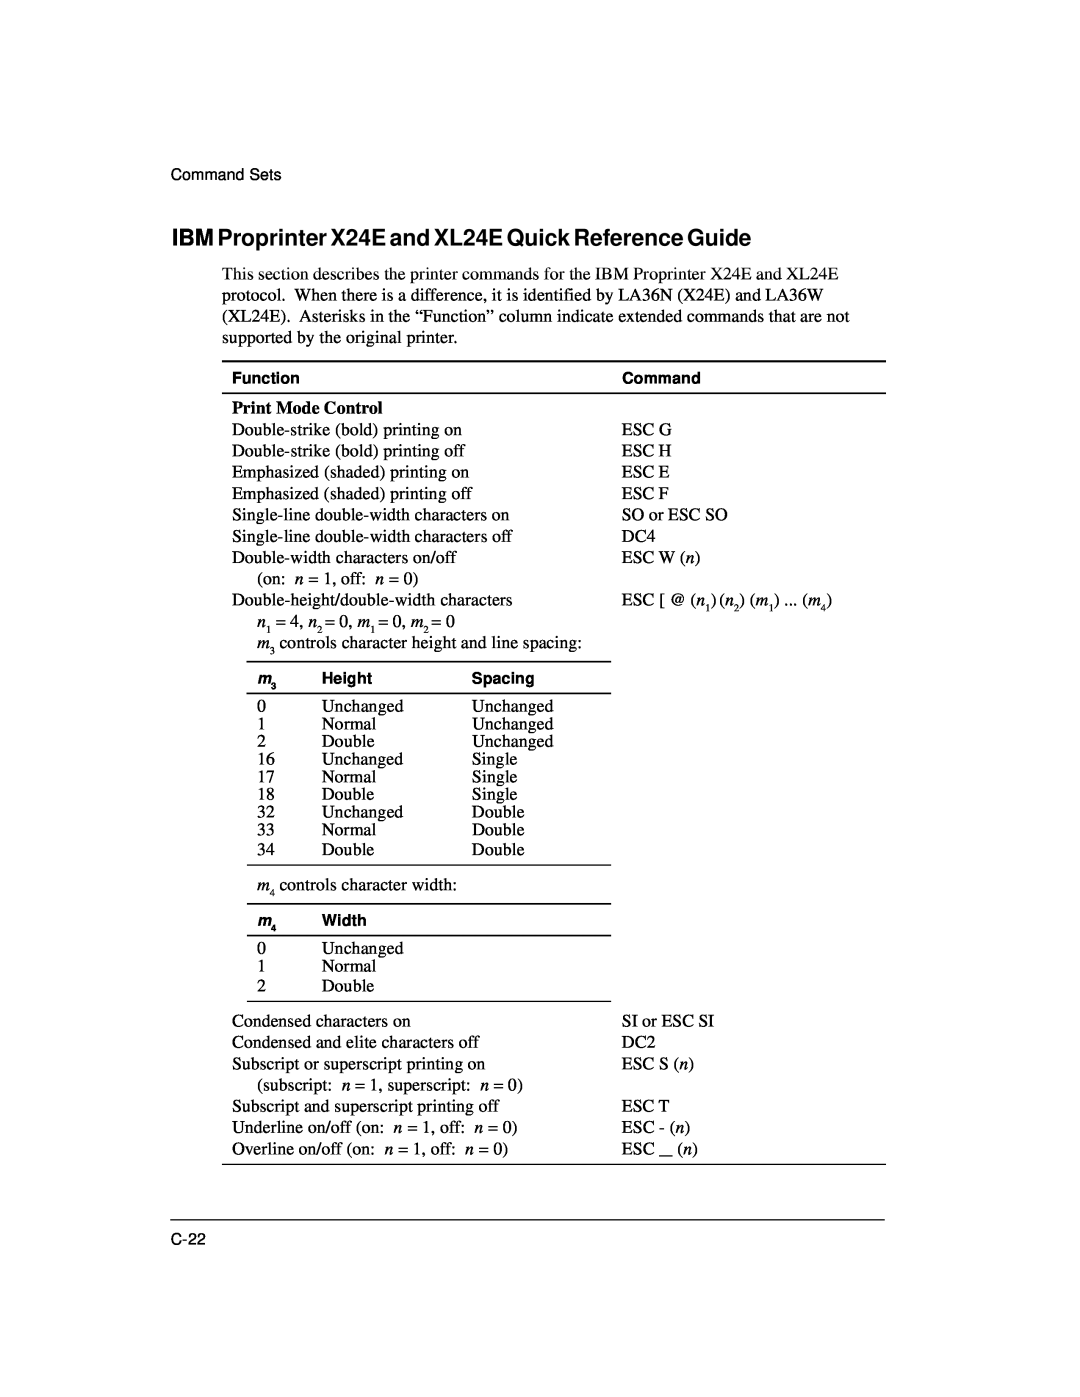 Genicom LA36 manual IBM Proprinter X24E and XL24E Quick Reference Guide, Print Mode Control 